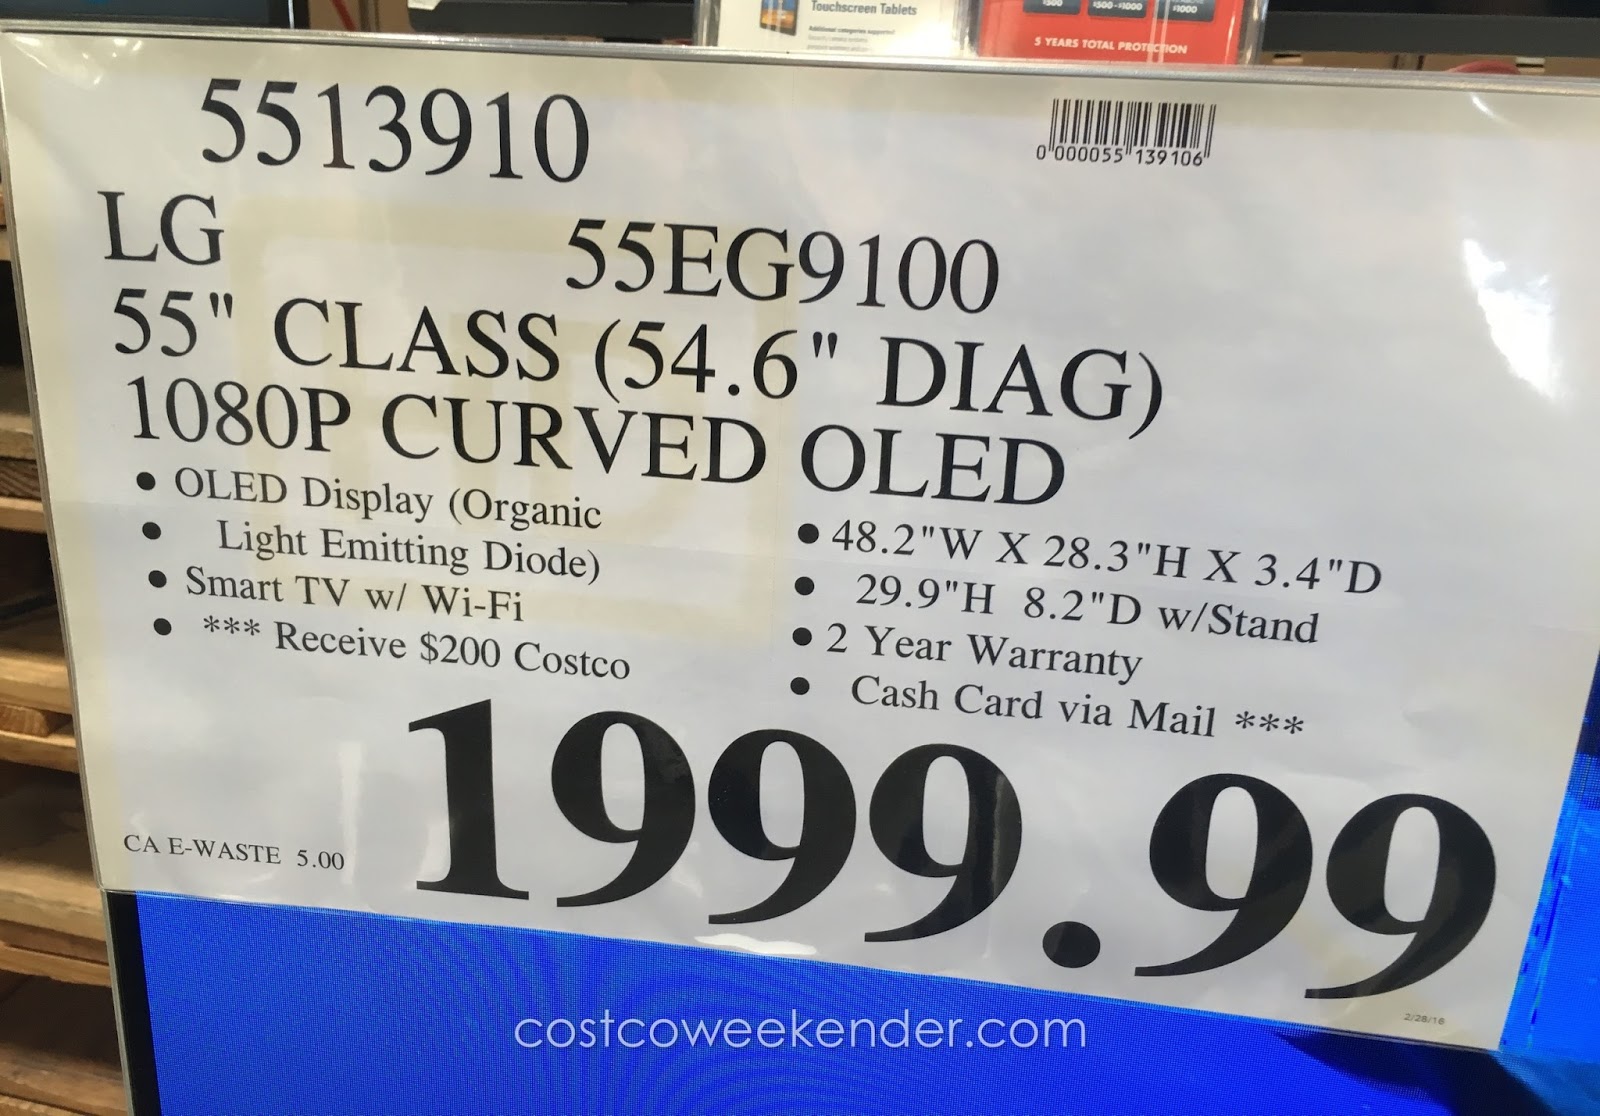 LG 55EG9100 55 Curved OLED TV Costco Weekender